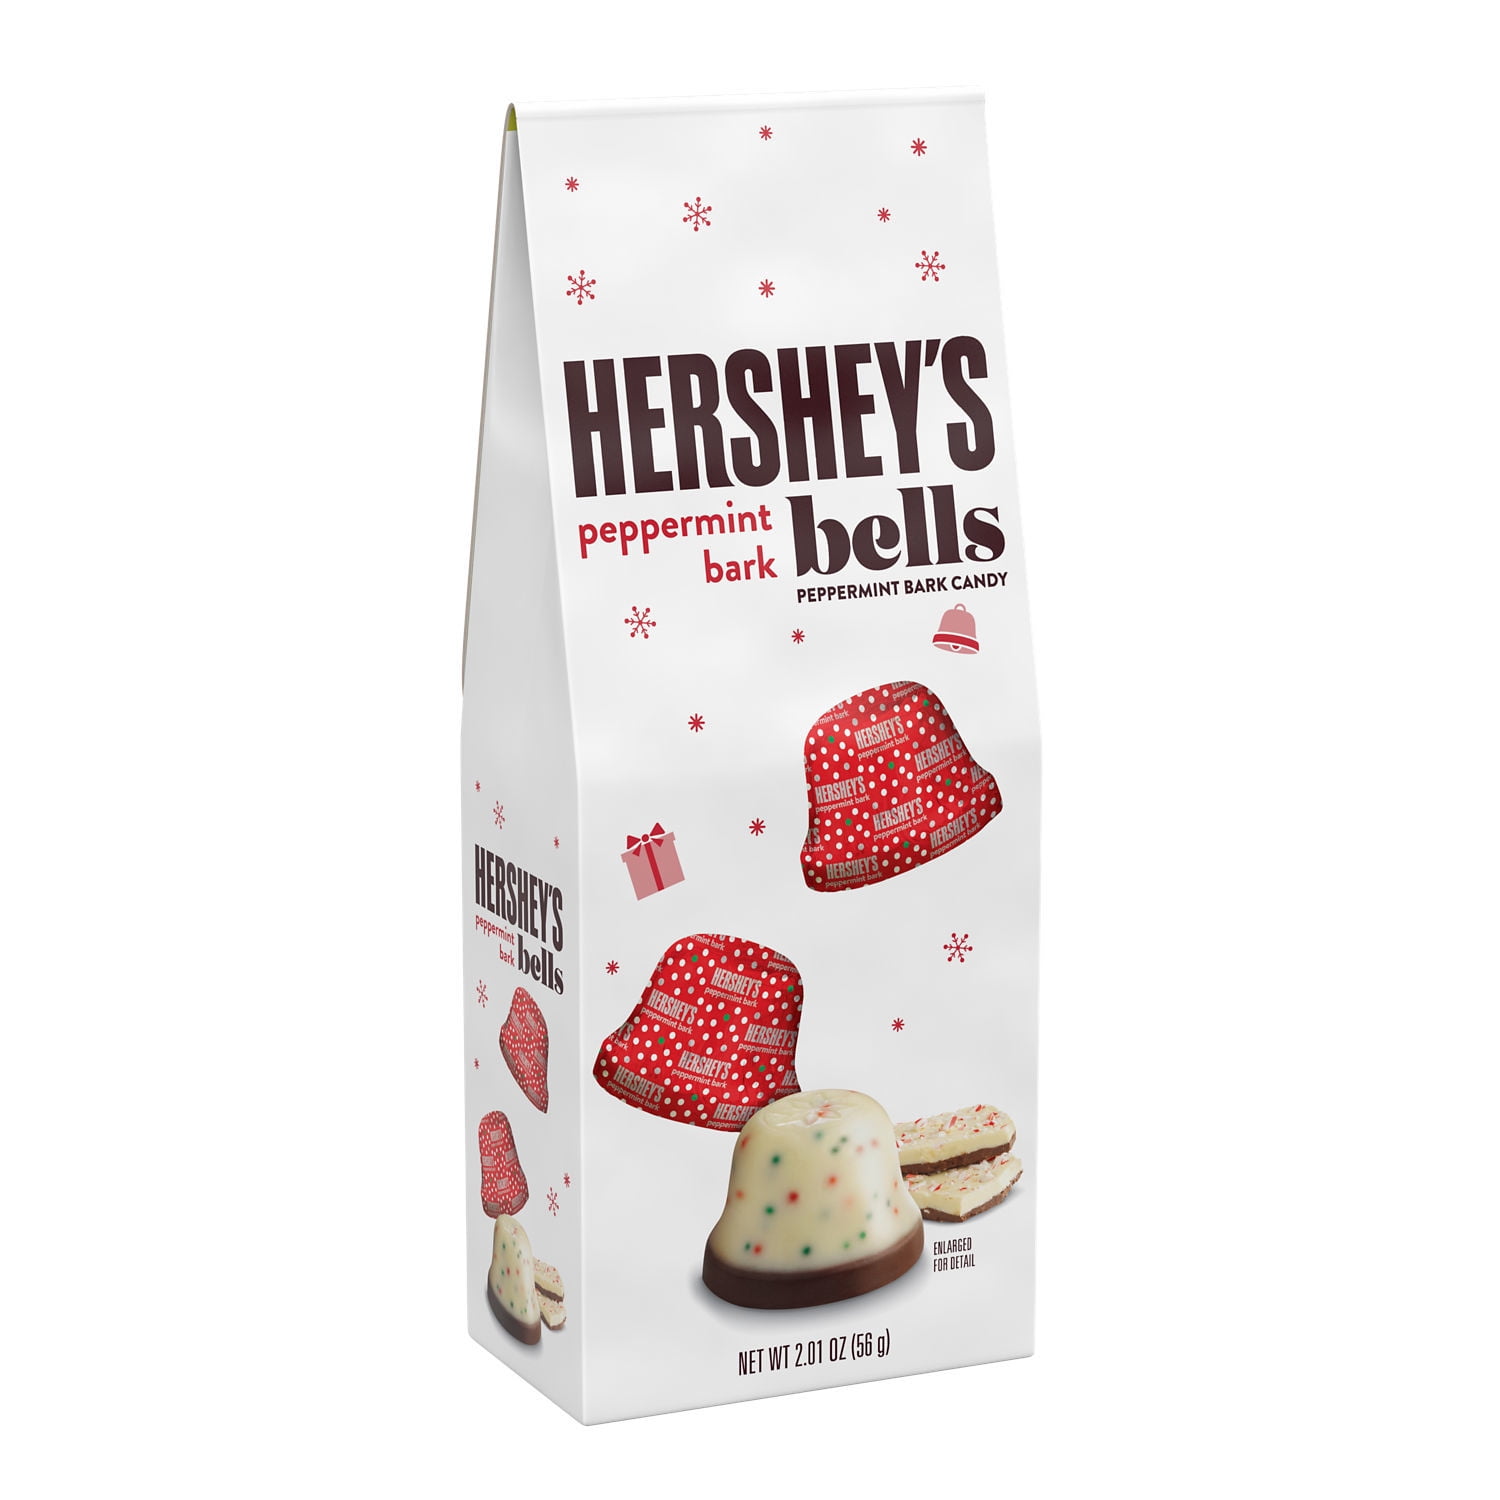 HERSHEY'S, Peppermint Bark Bells Candy, Christmas, 2.01 oz, Bag